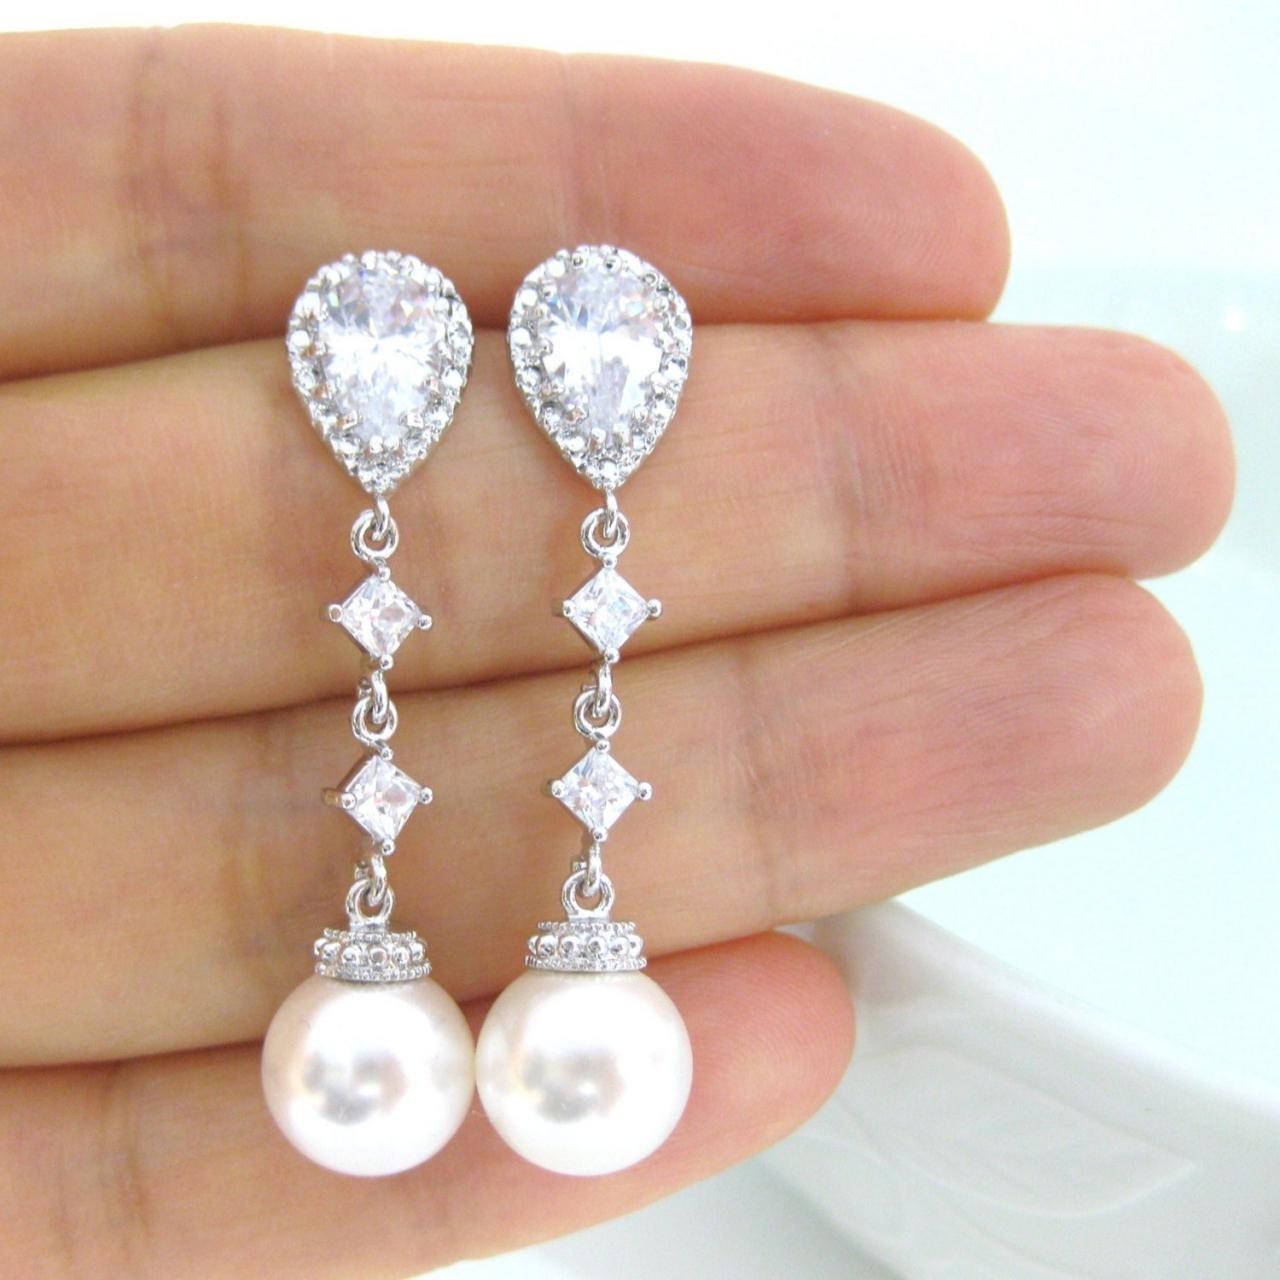 Bridal Pearl Earrings Wedding Jewelry Bridesmaid Gift Bridesmaid Earrings Swarovski Pearl Earrings (e199)